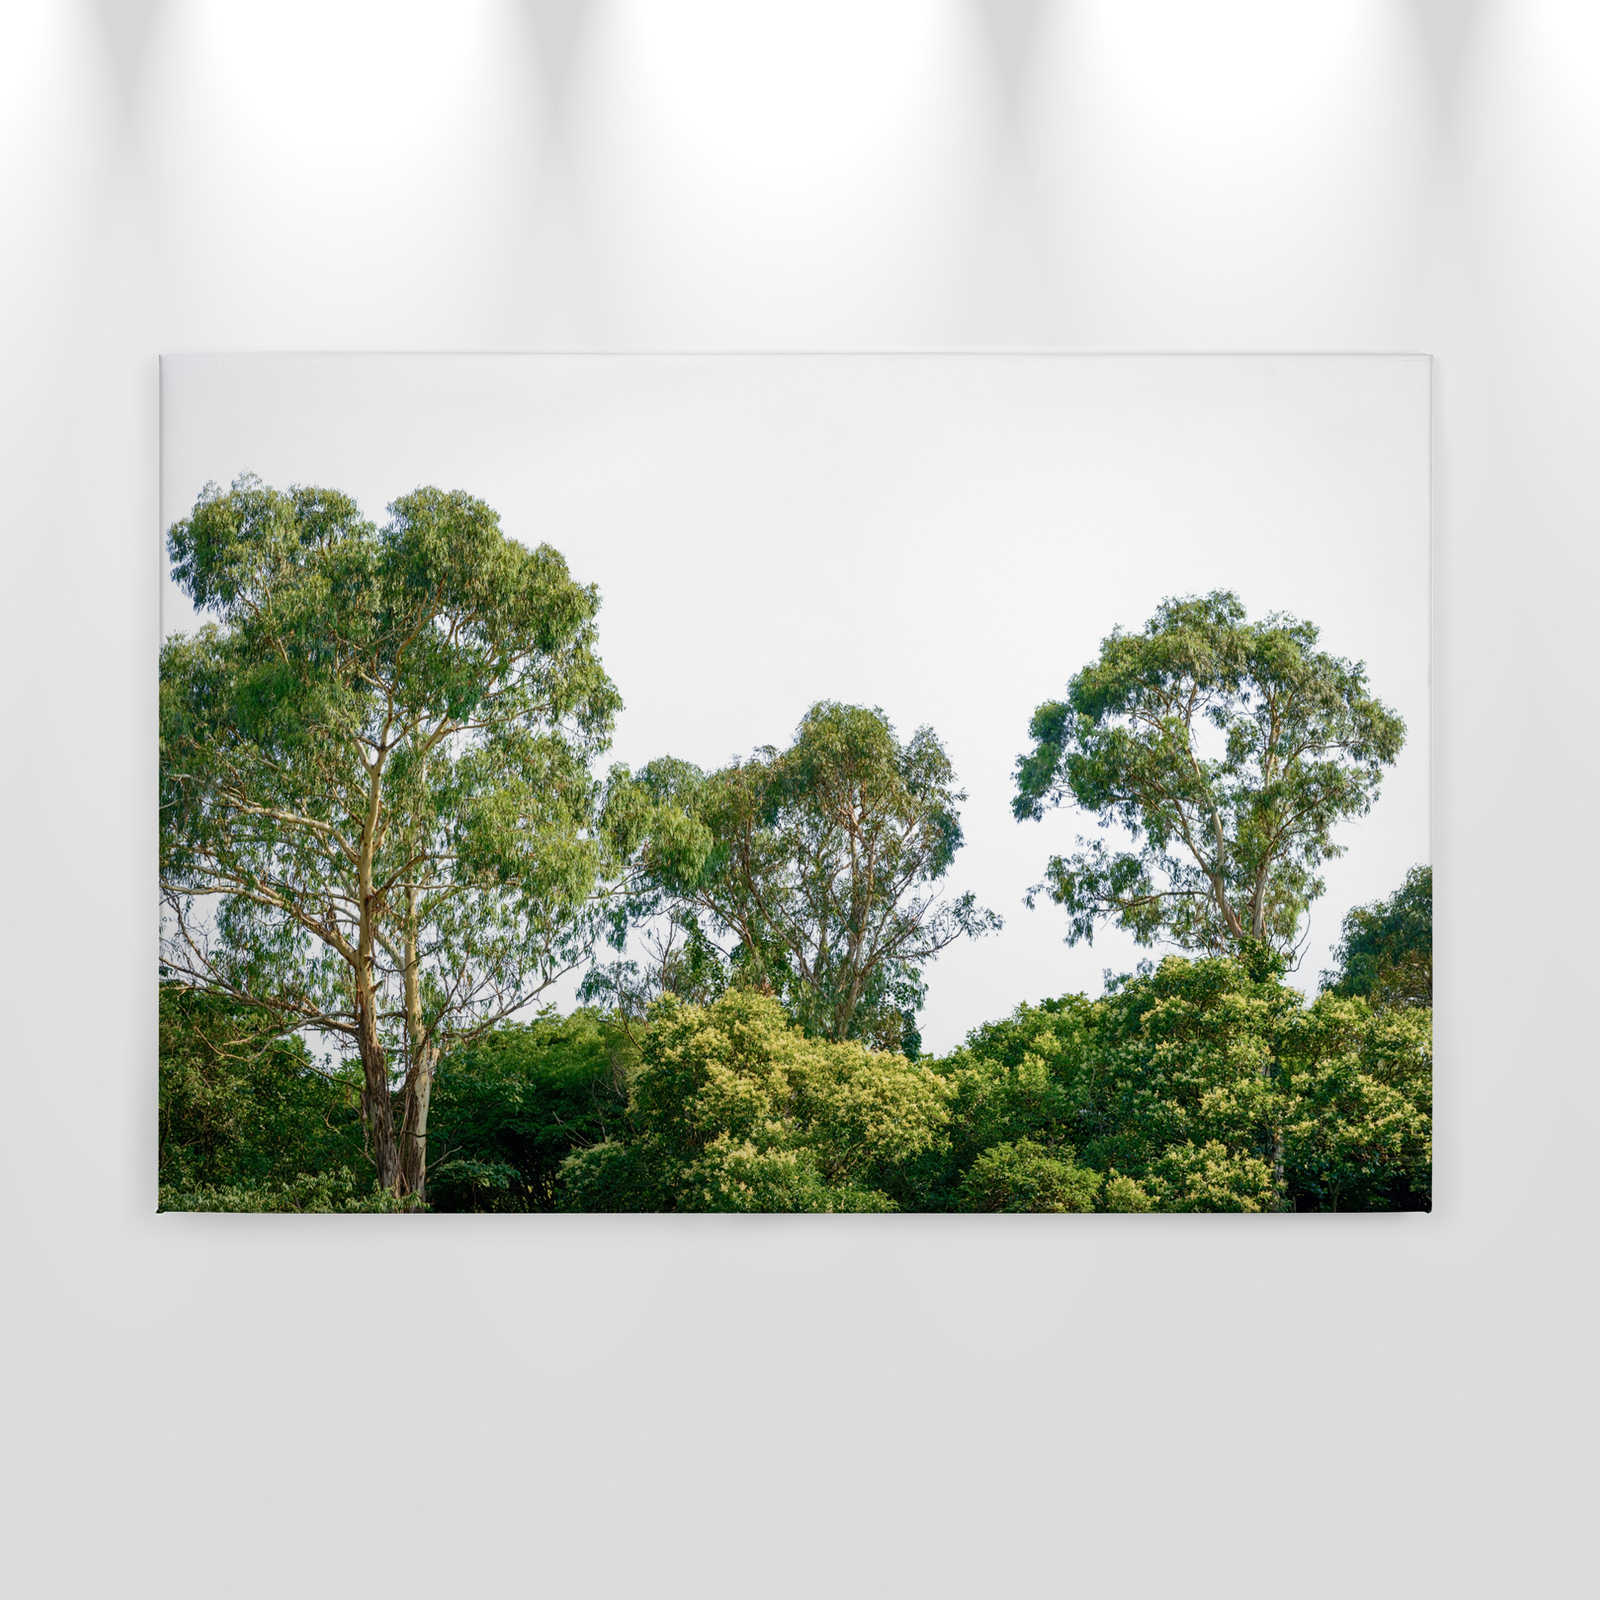             Canvas met boomtoppen, bosmotief - 0,90 m x 0,60 m
        